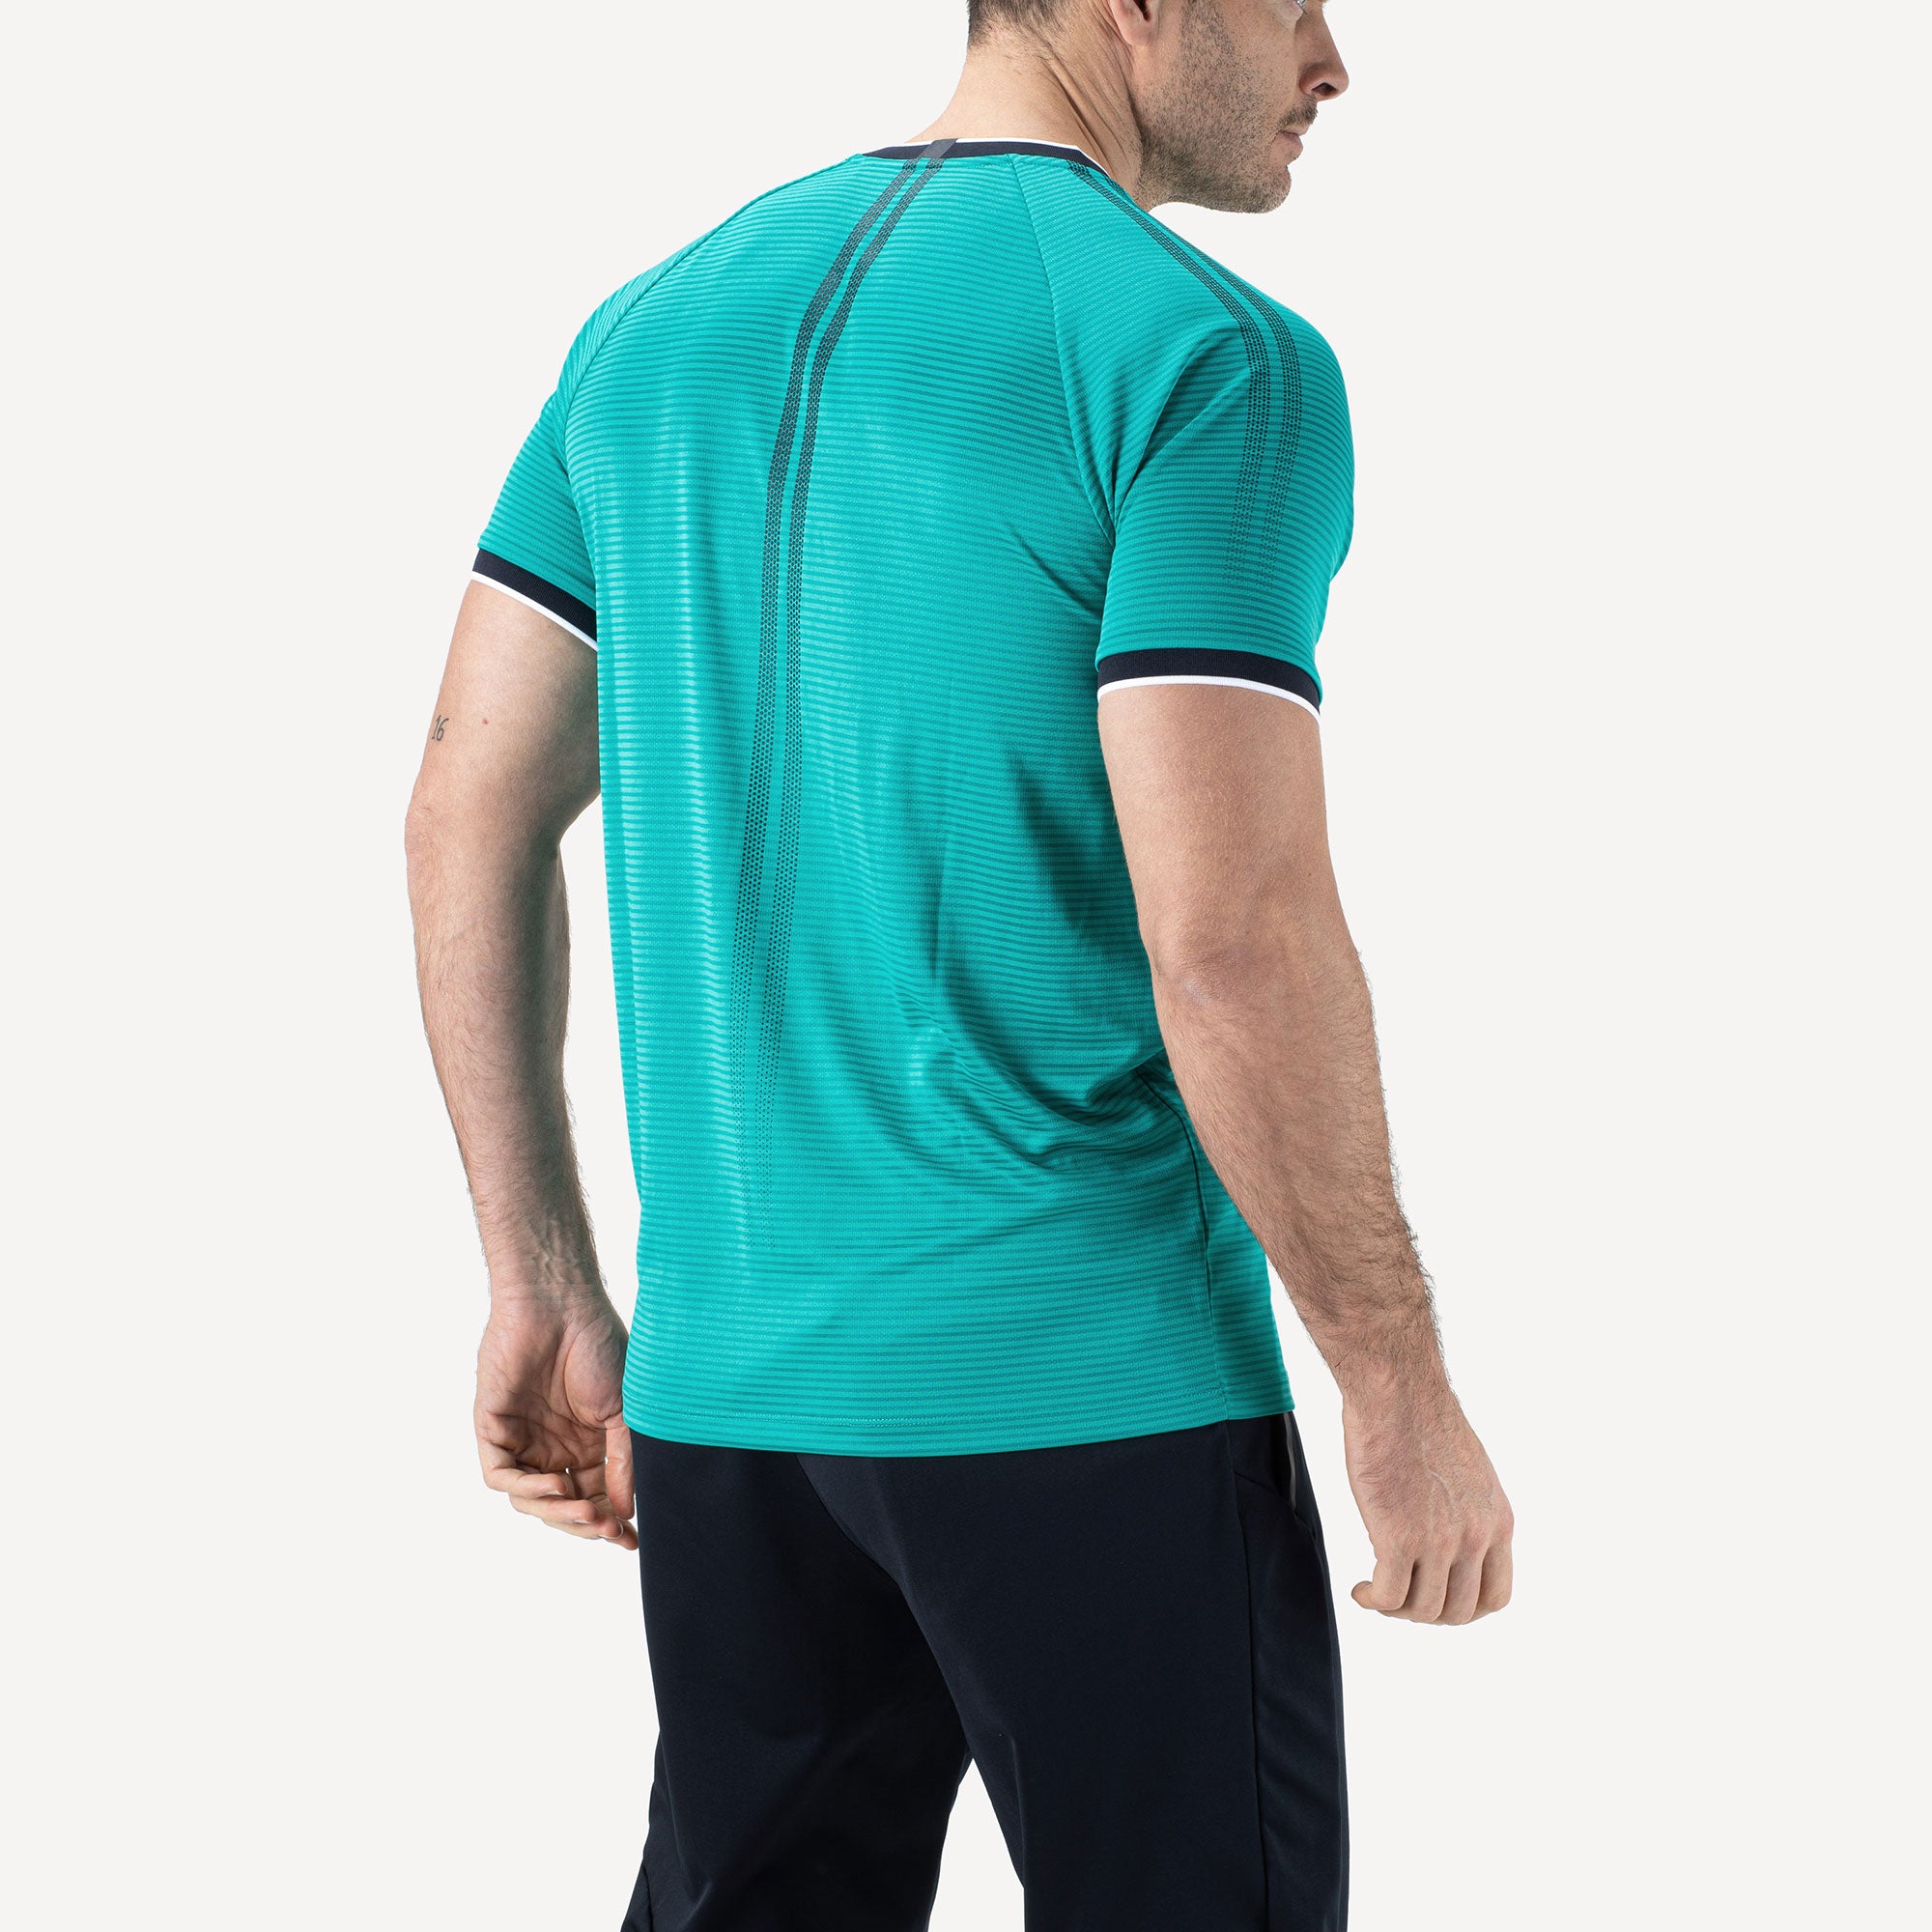 Sjeng Sports Patel Men's Tennis Shirt Green (2)